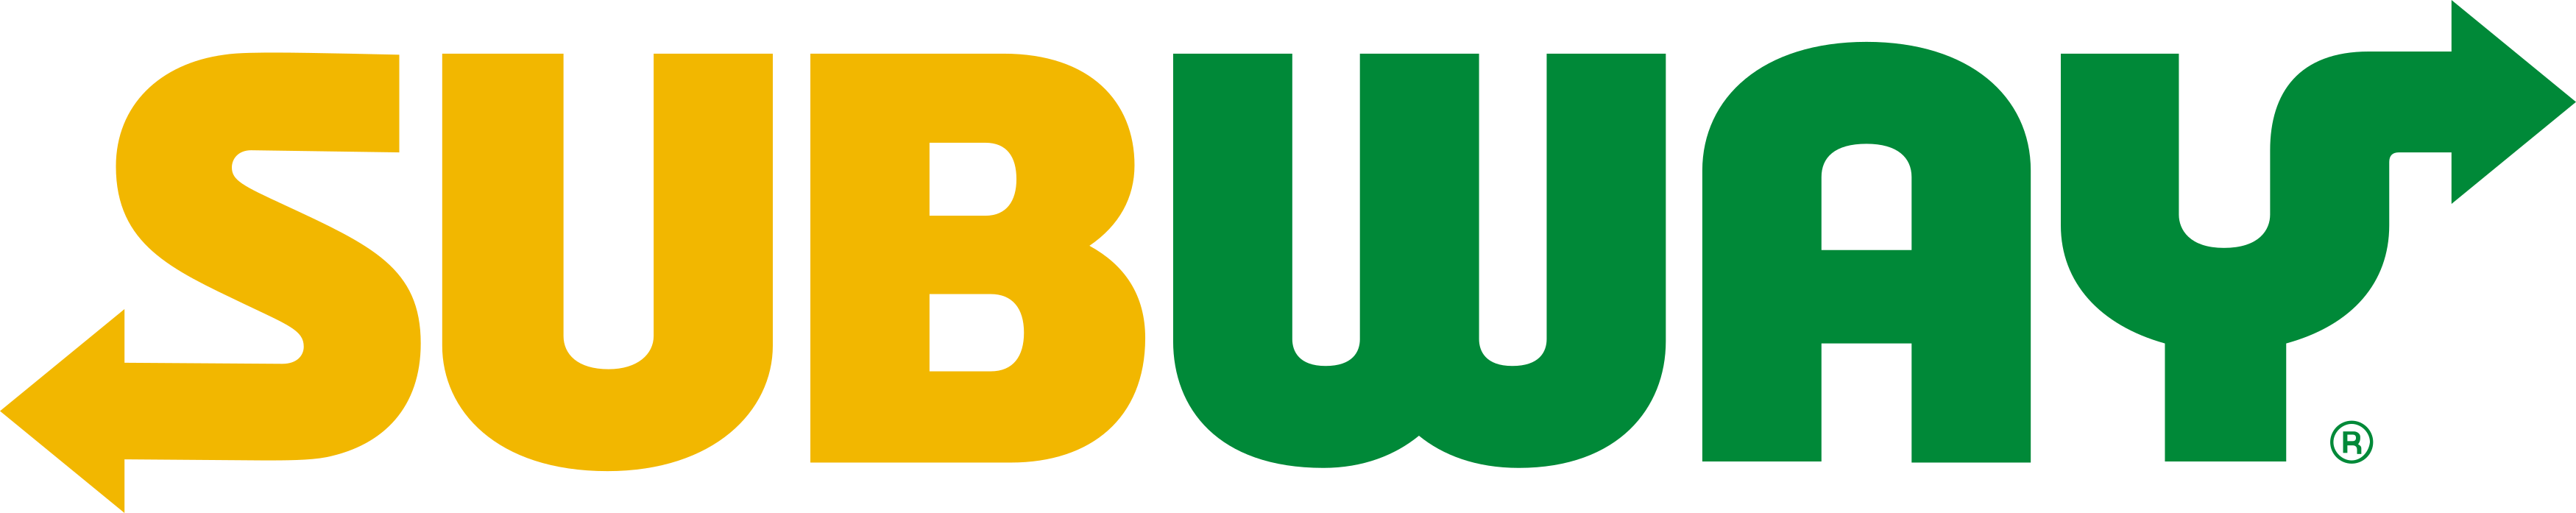 subway-logo1